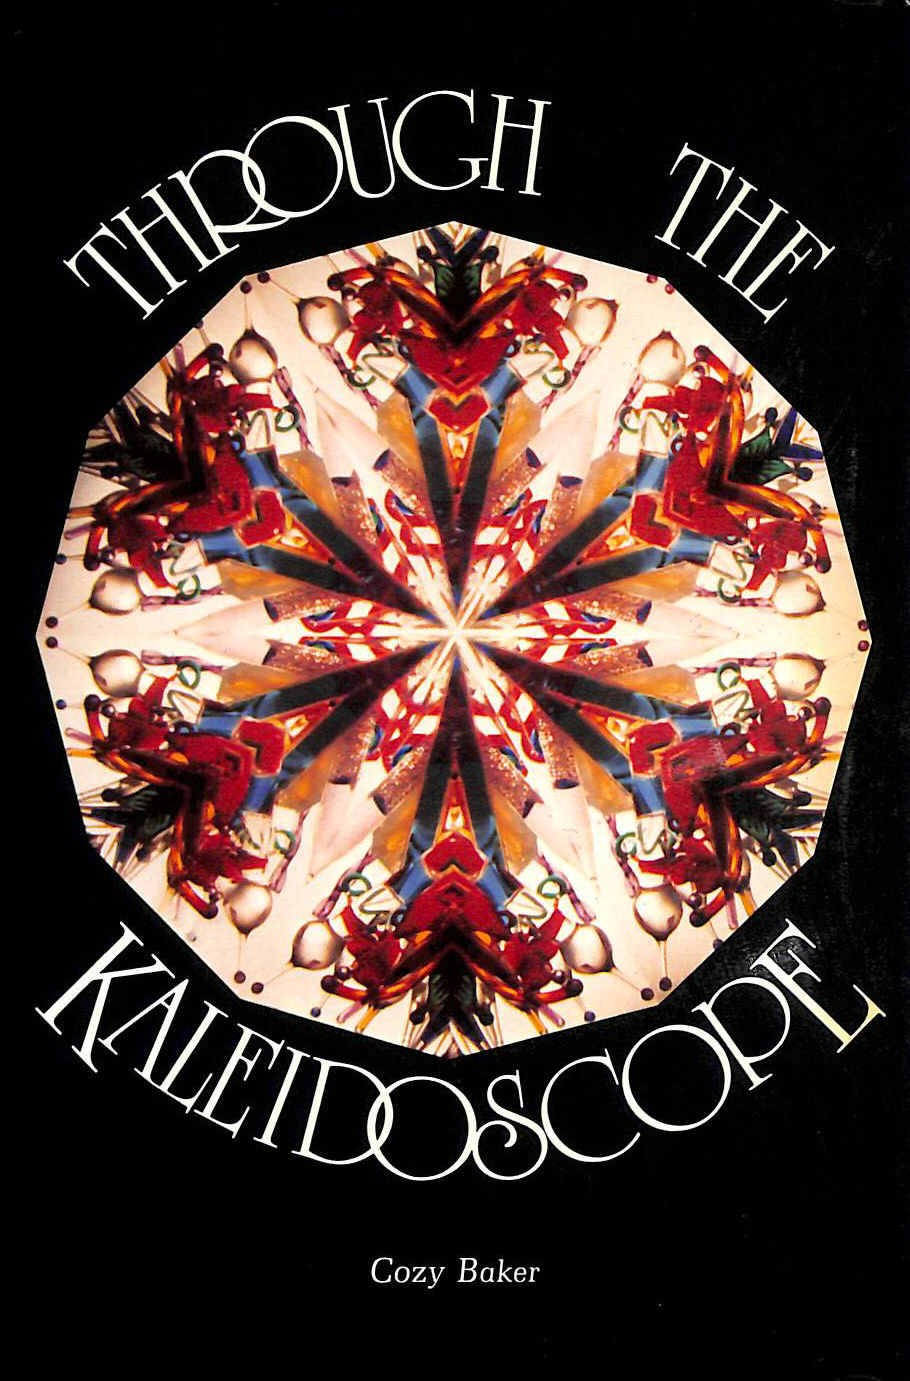 COZY BAKER - Through the Kaleidoscope